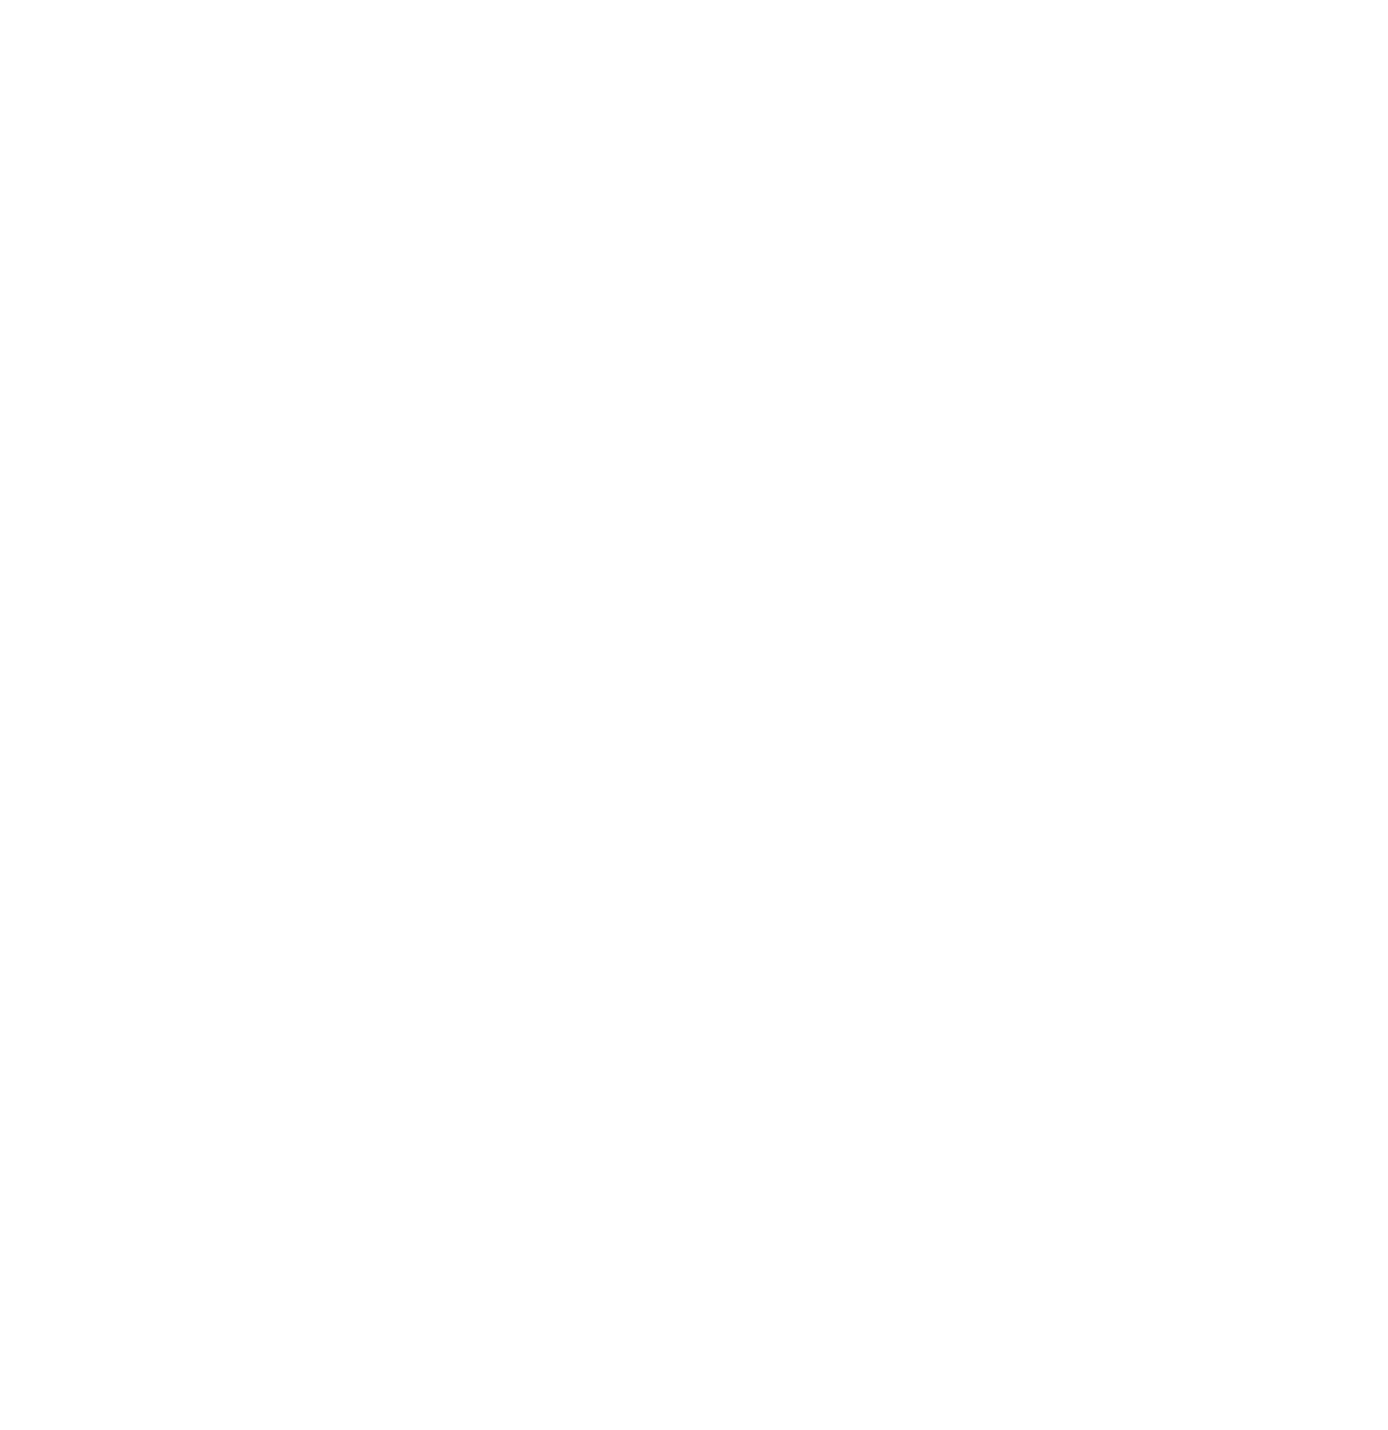 Europaportens skola